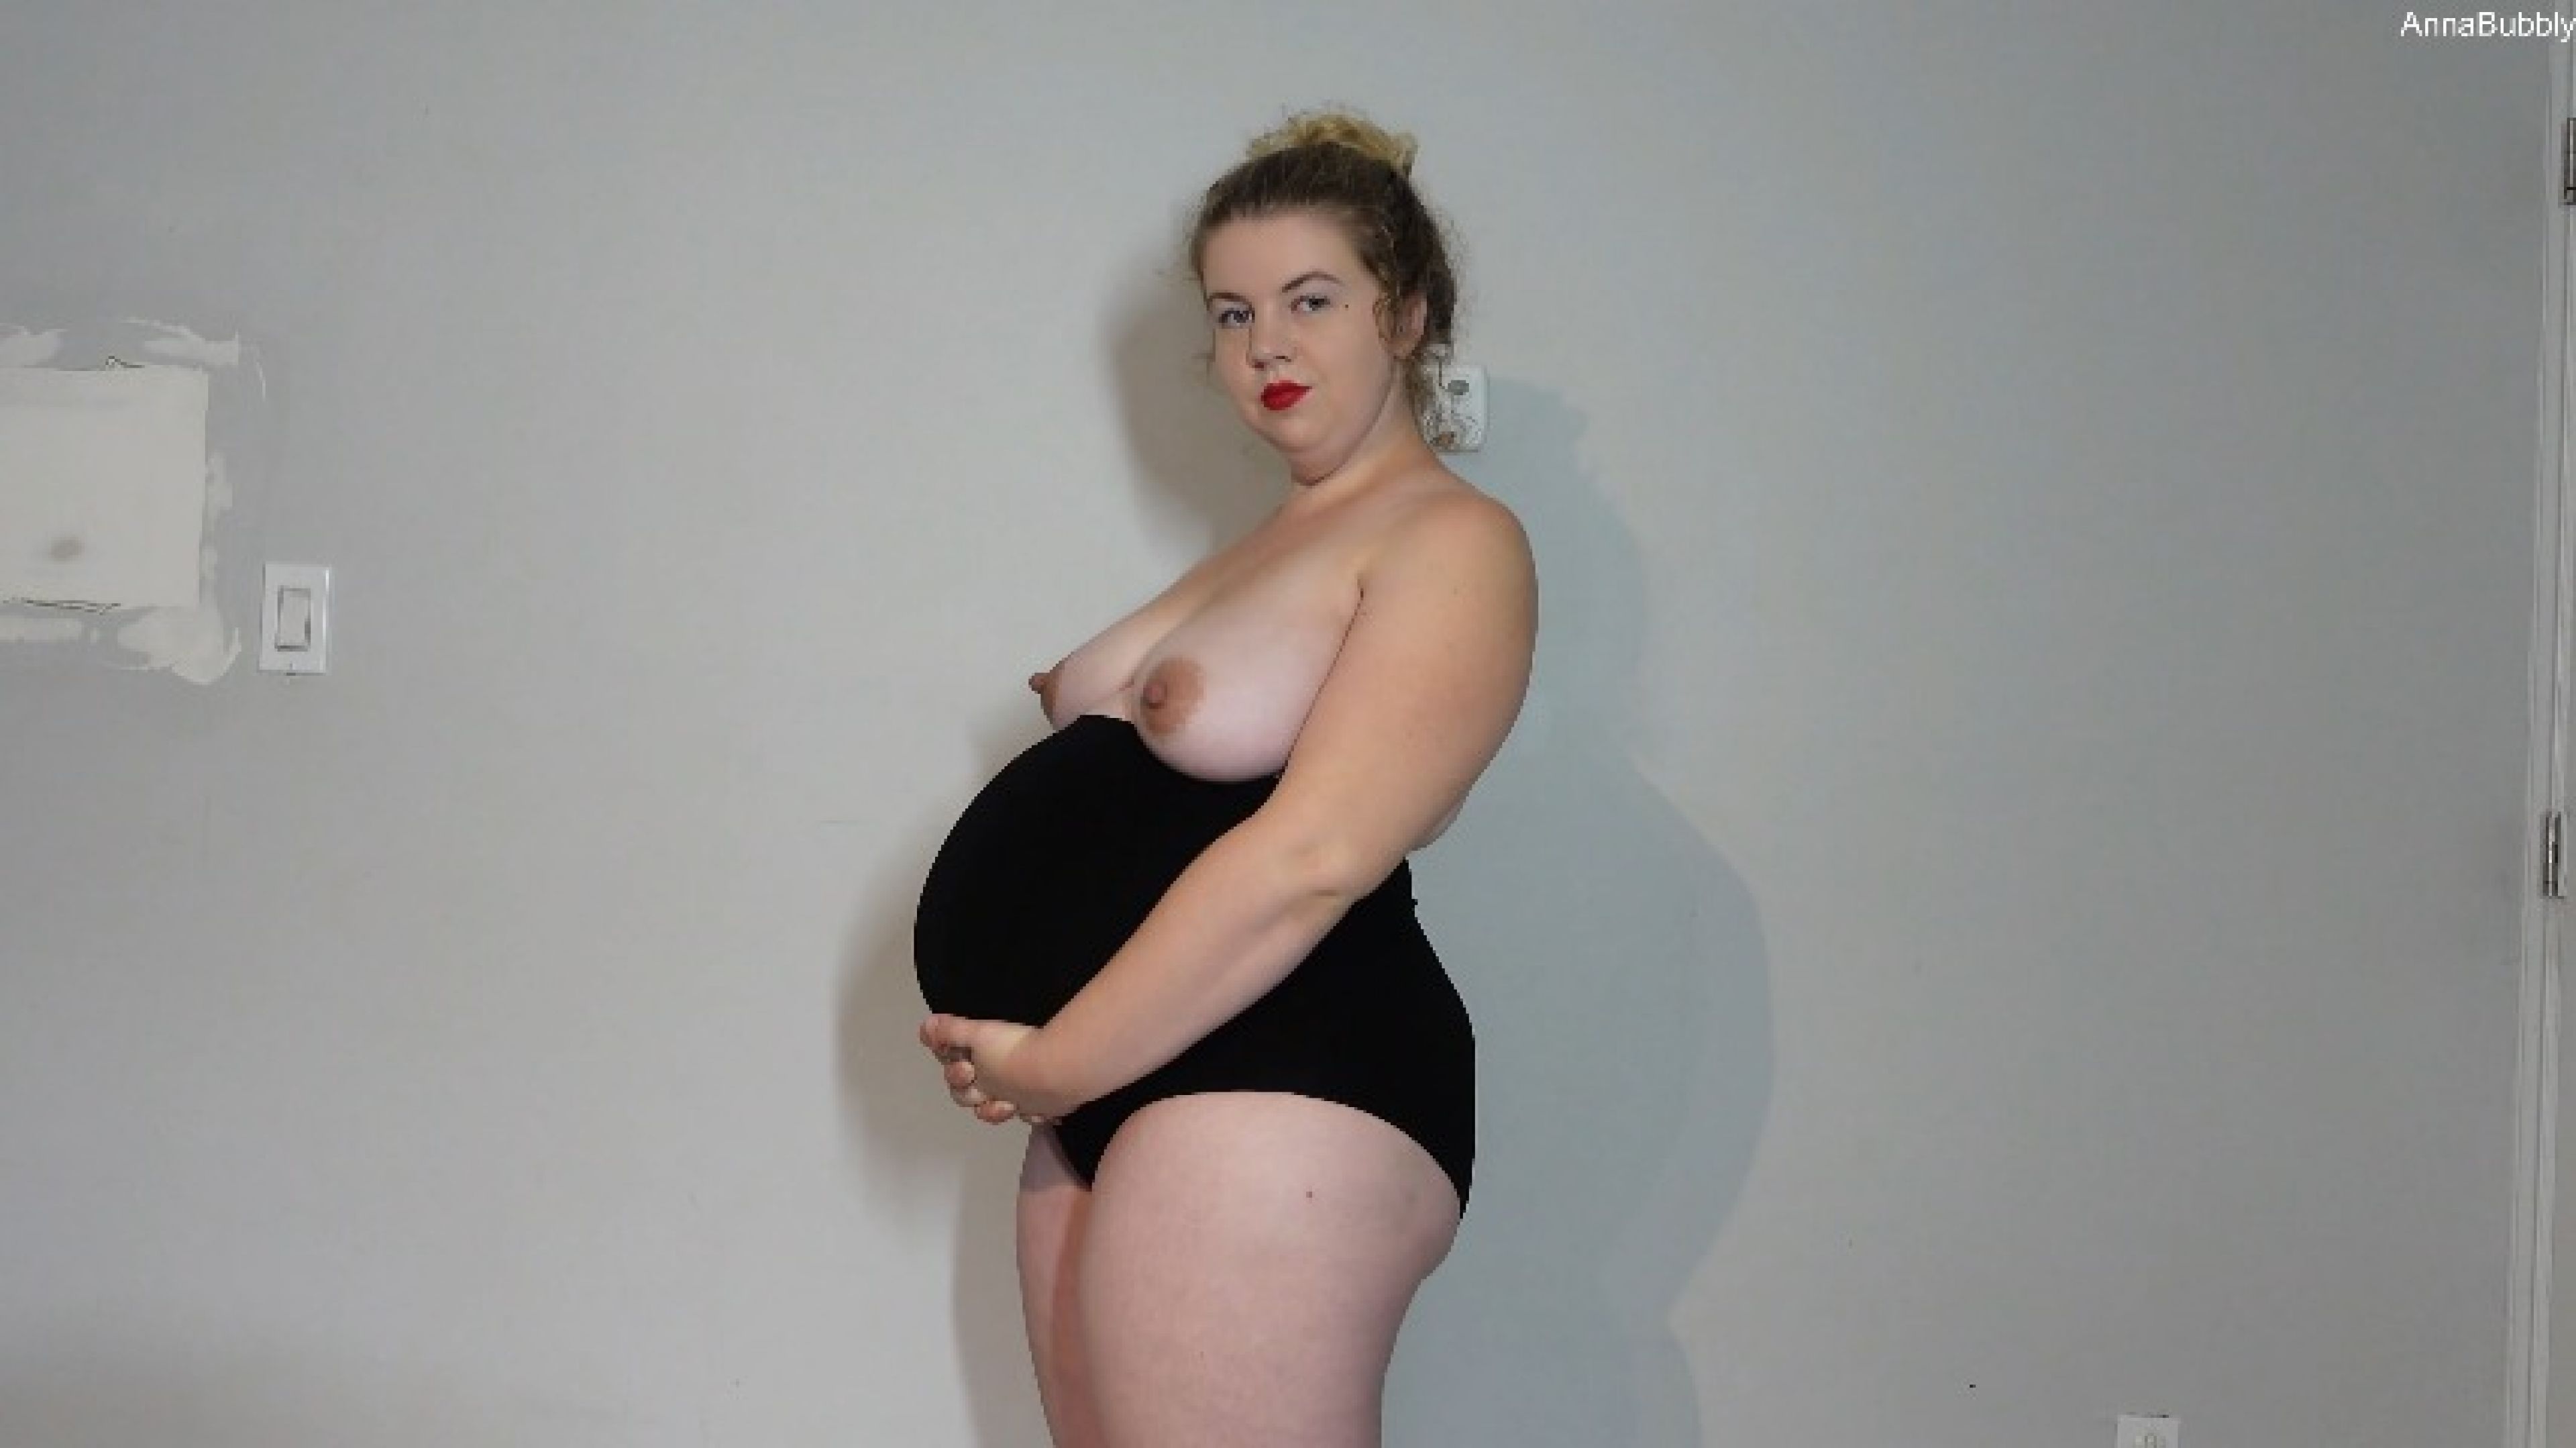 Maternity Panties 9 Months